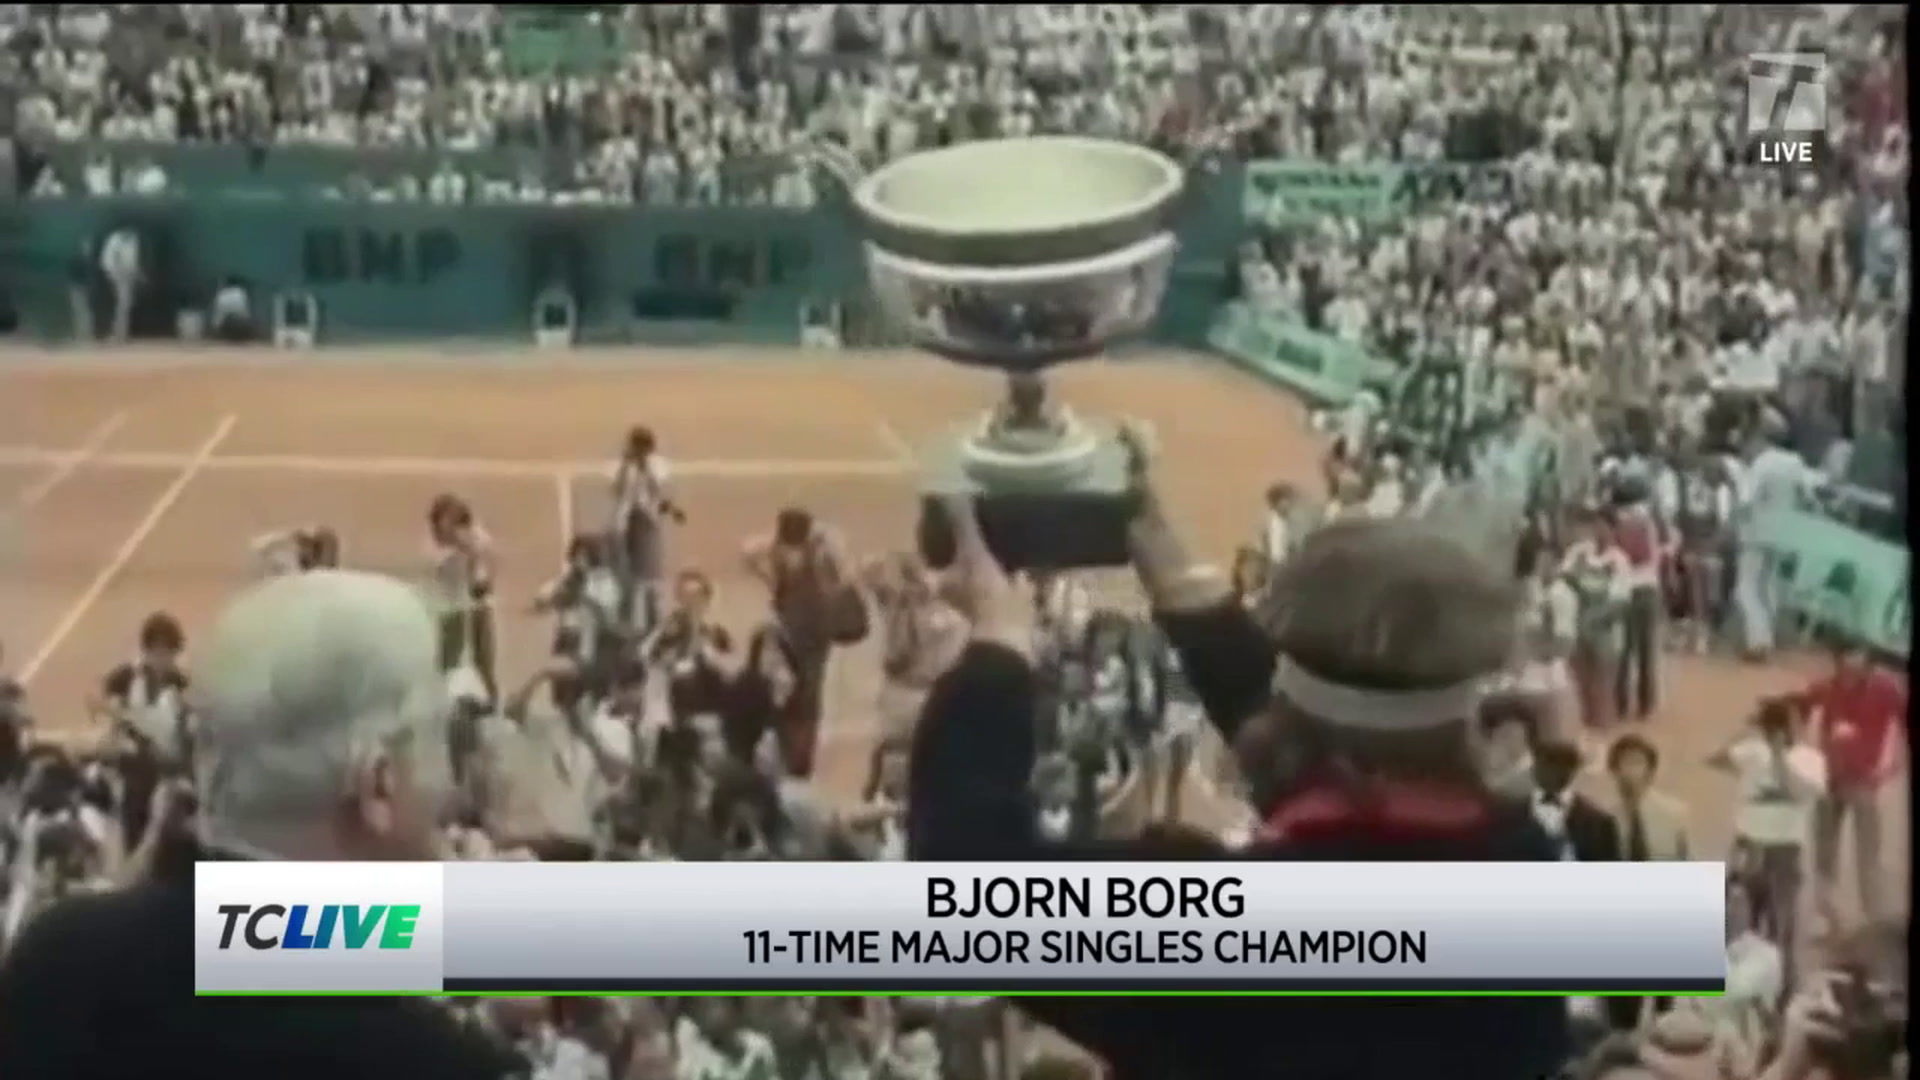 Fila Signs Tennis Legend Björn Borg's 15-Year-Old Son Leo